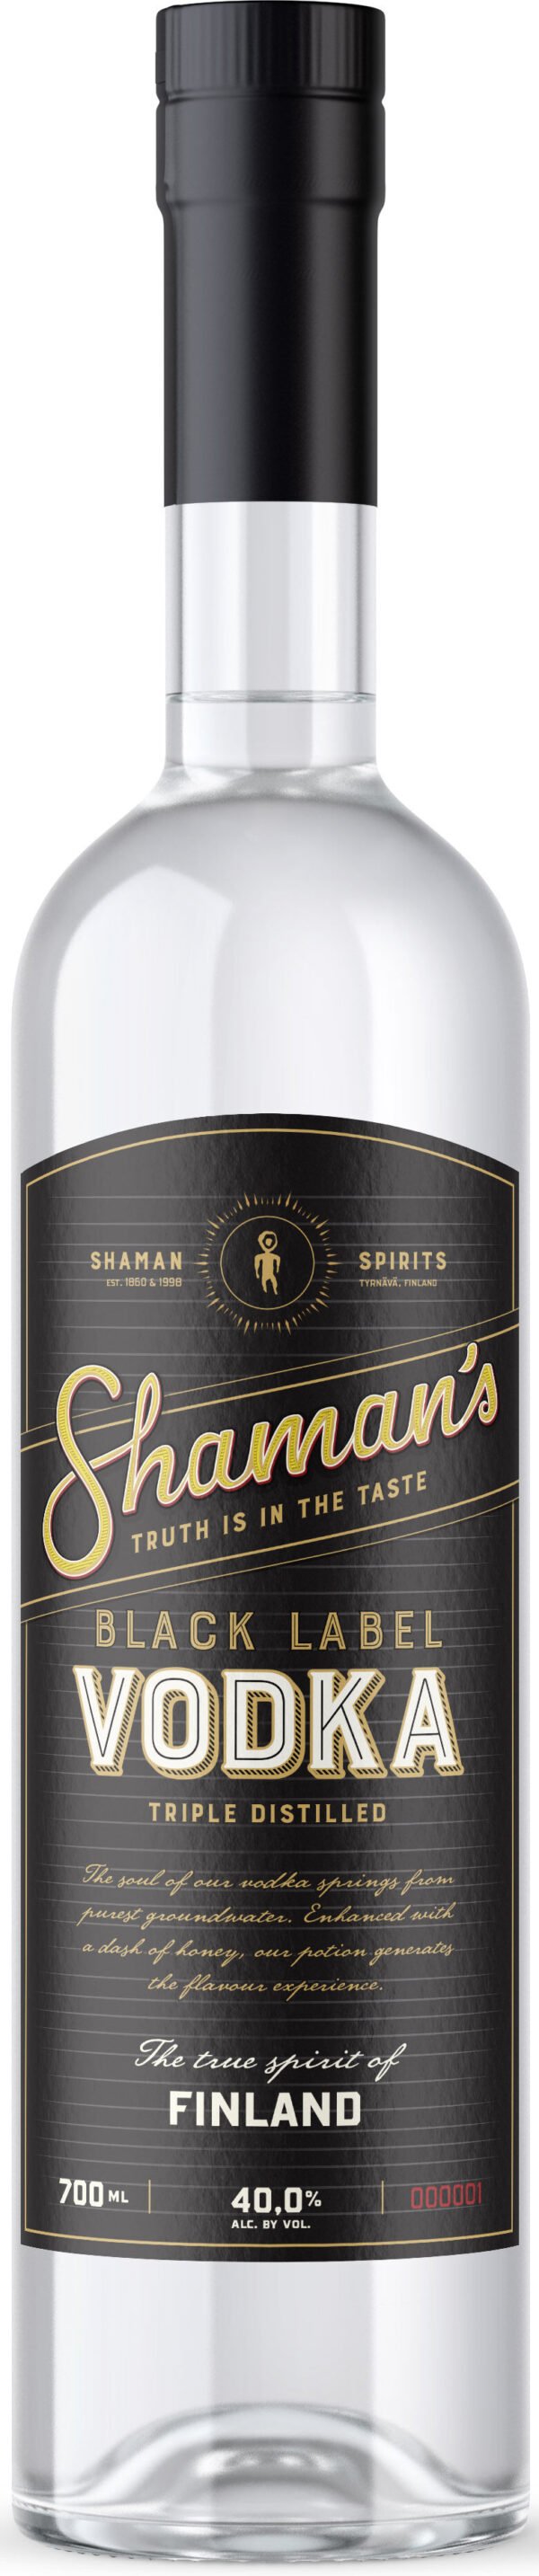 Shaman Black Label Vodka